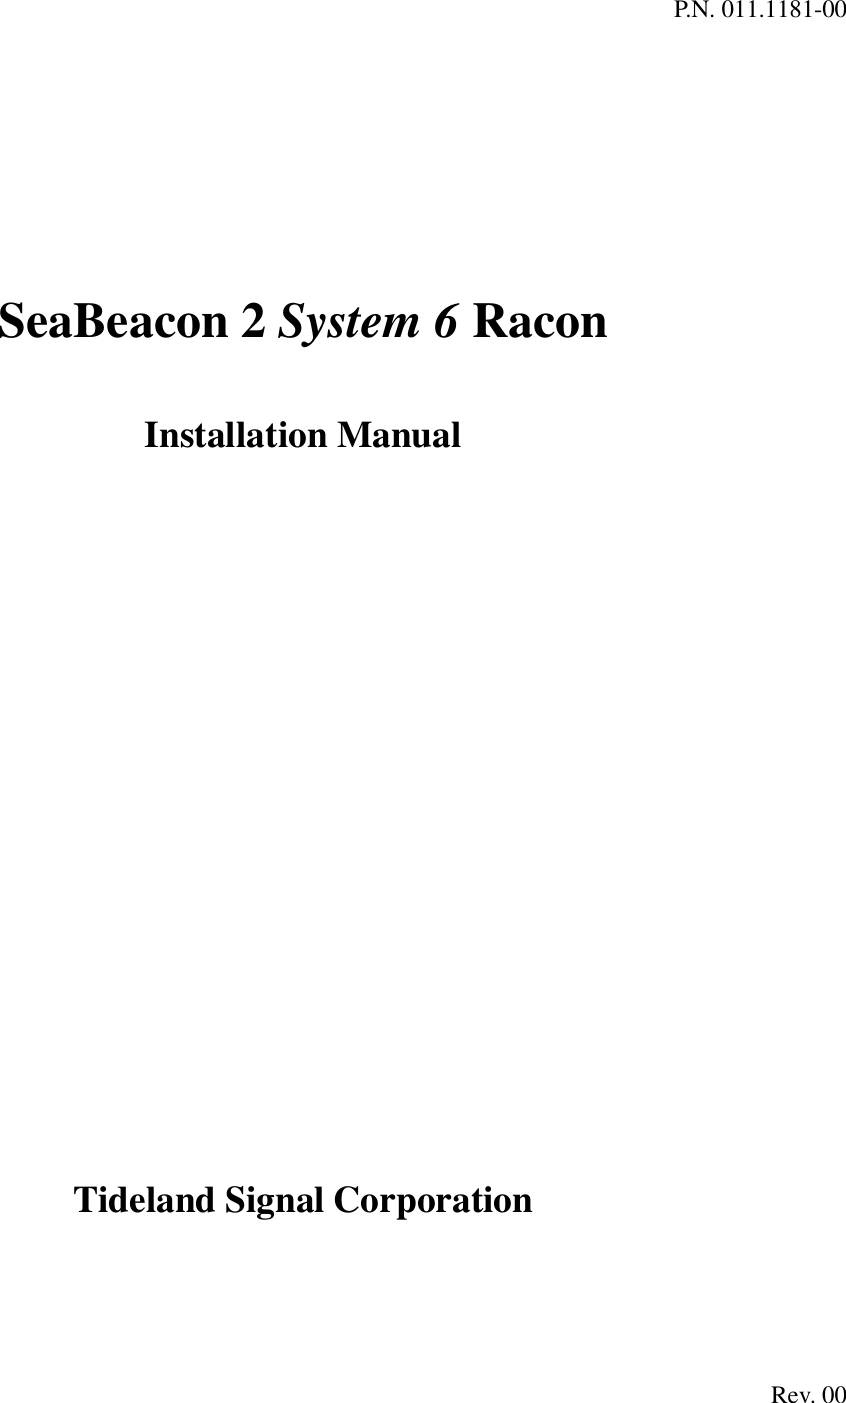 P.N. 011.1181-00SeaBeacon 2 System 6 RaconInstallation ManualTideland Signal CorporationRev. 00